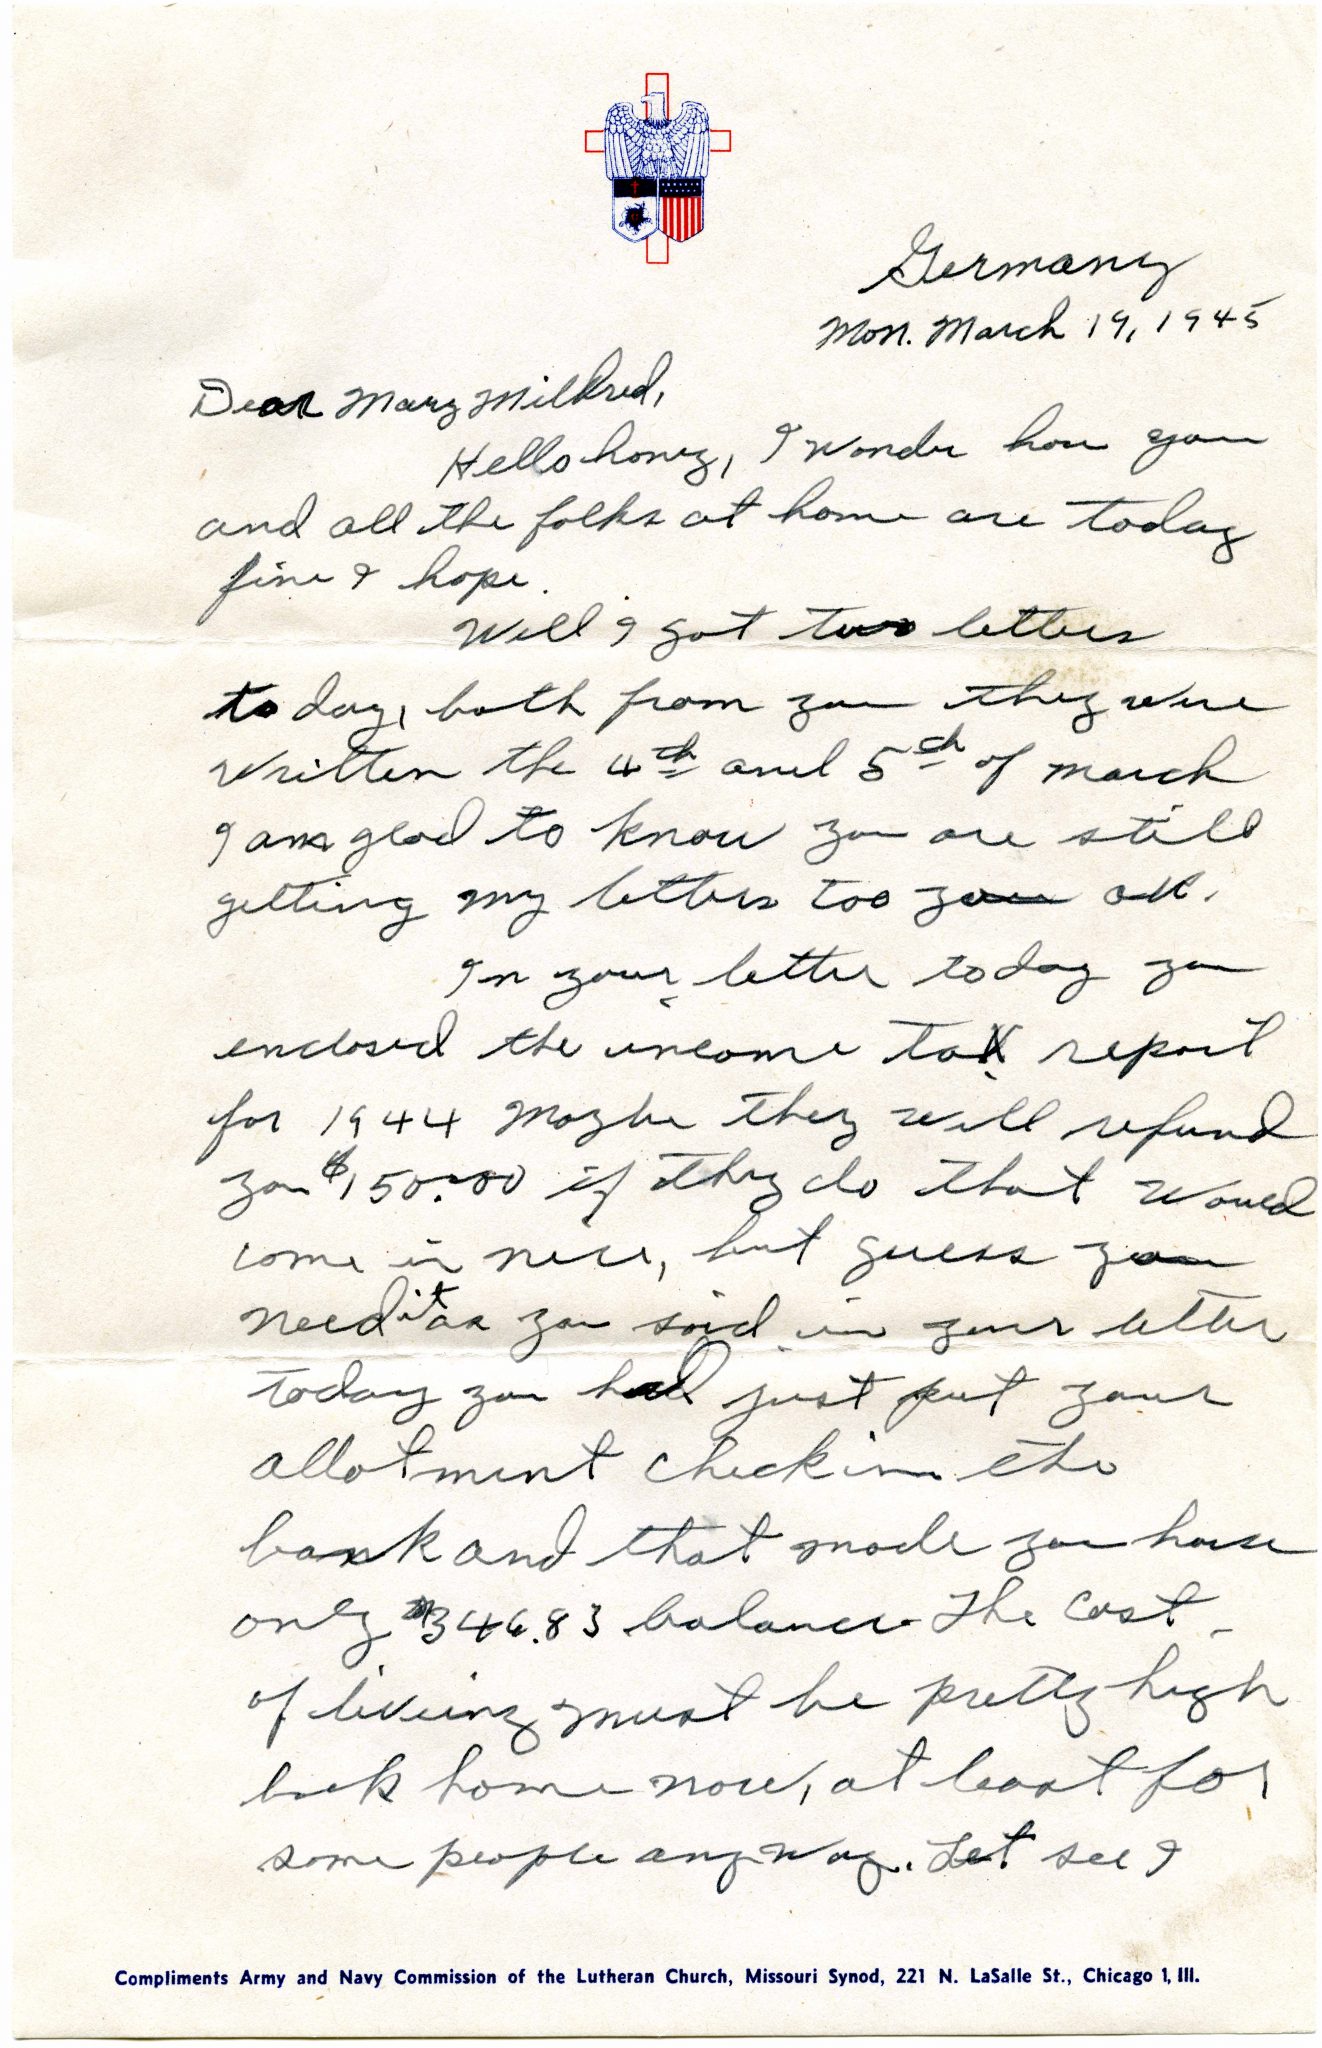 Thomas R. Jones, Sr. correspondence with Mary Mildred Jones, 1945 March 19